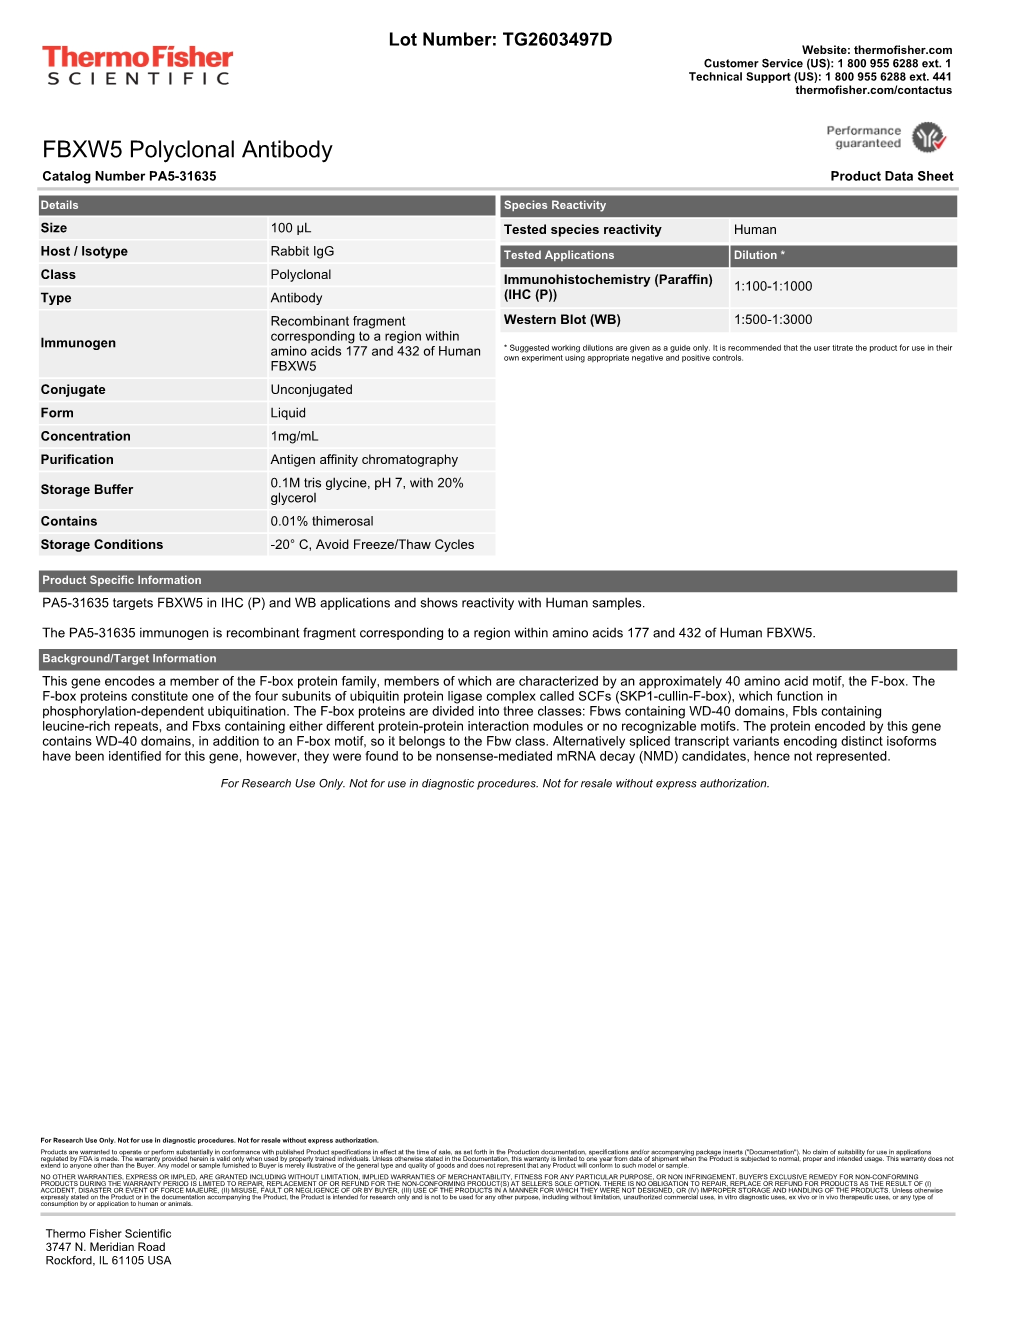 FBXW5 Polyclonal Antibody Catalog Number PA5-31635 Product Data Sheet